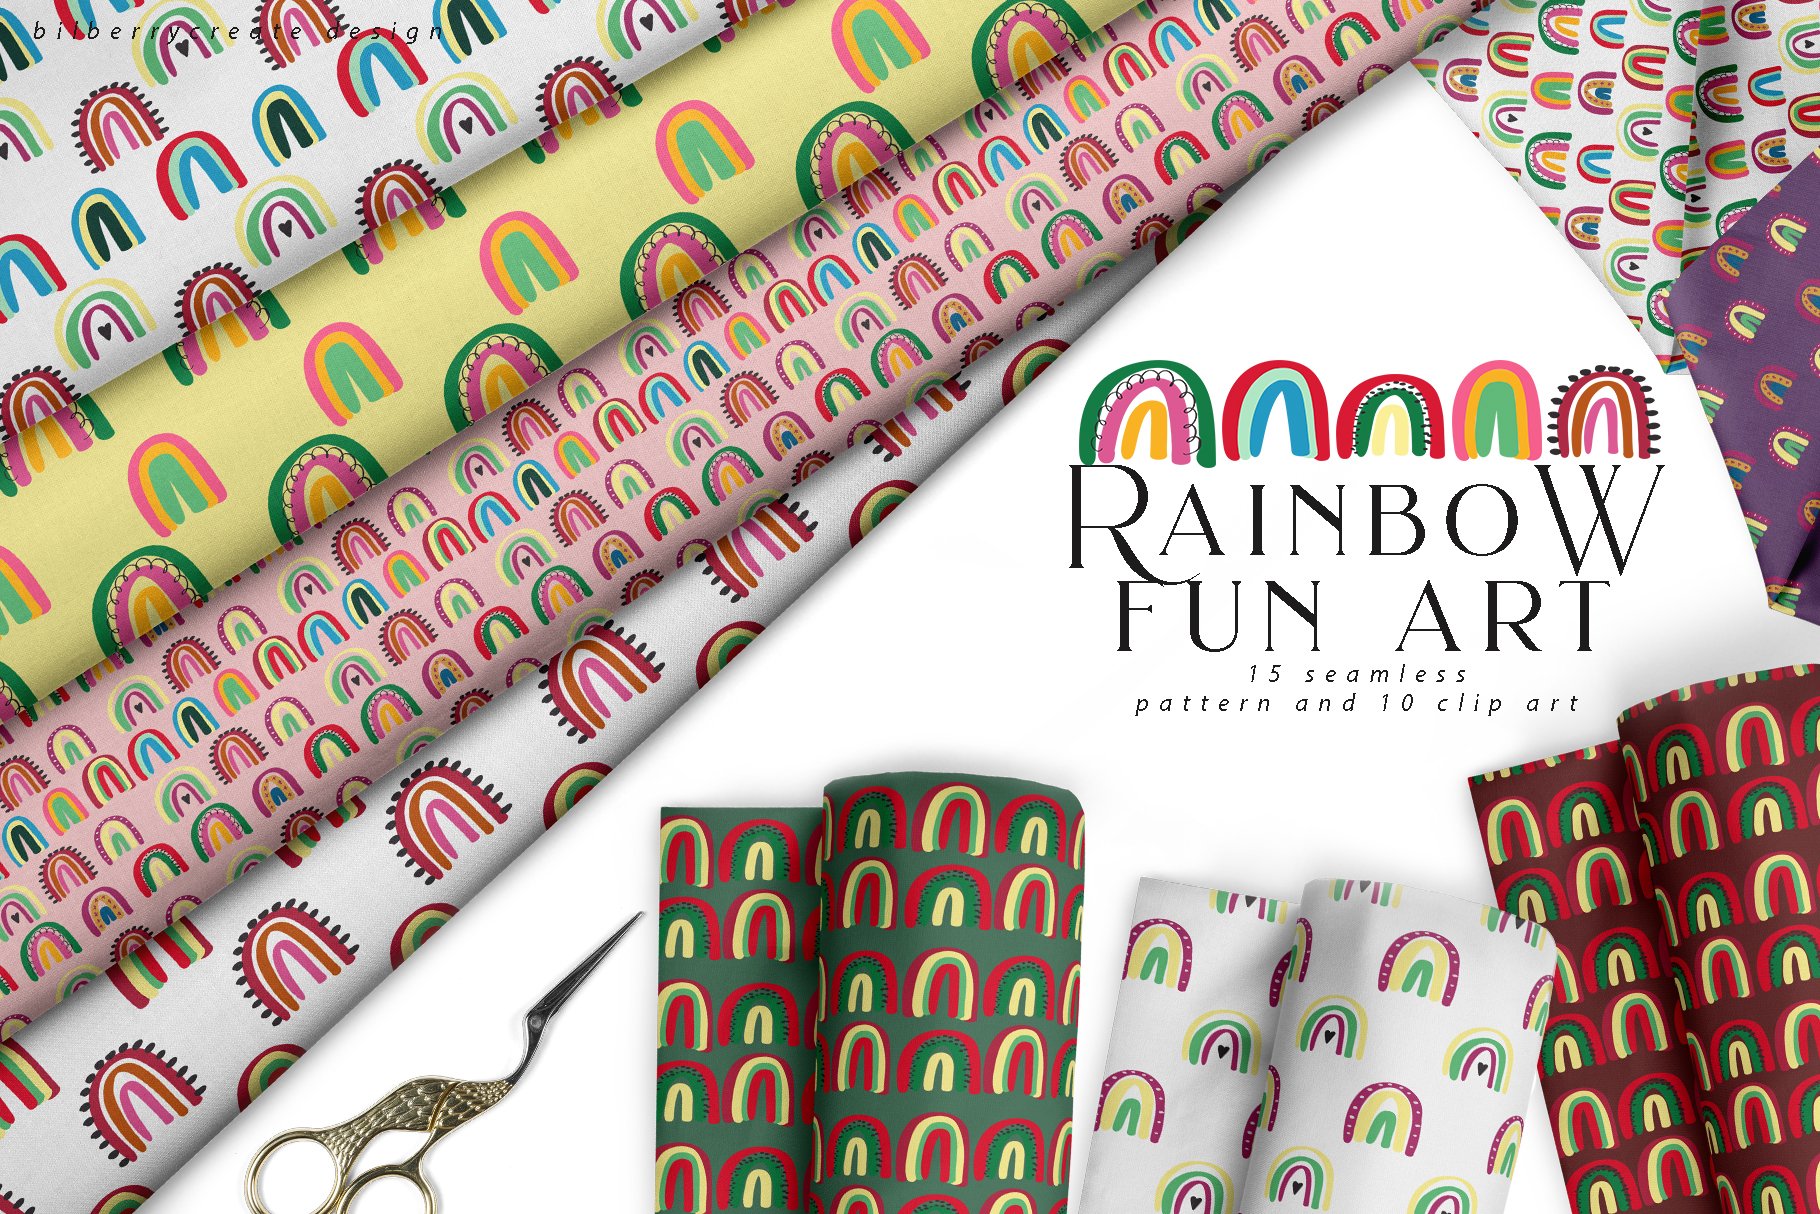 Rainbow Fun Art cover image.